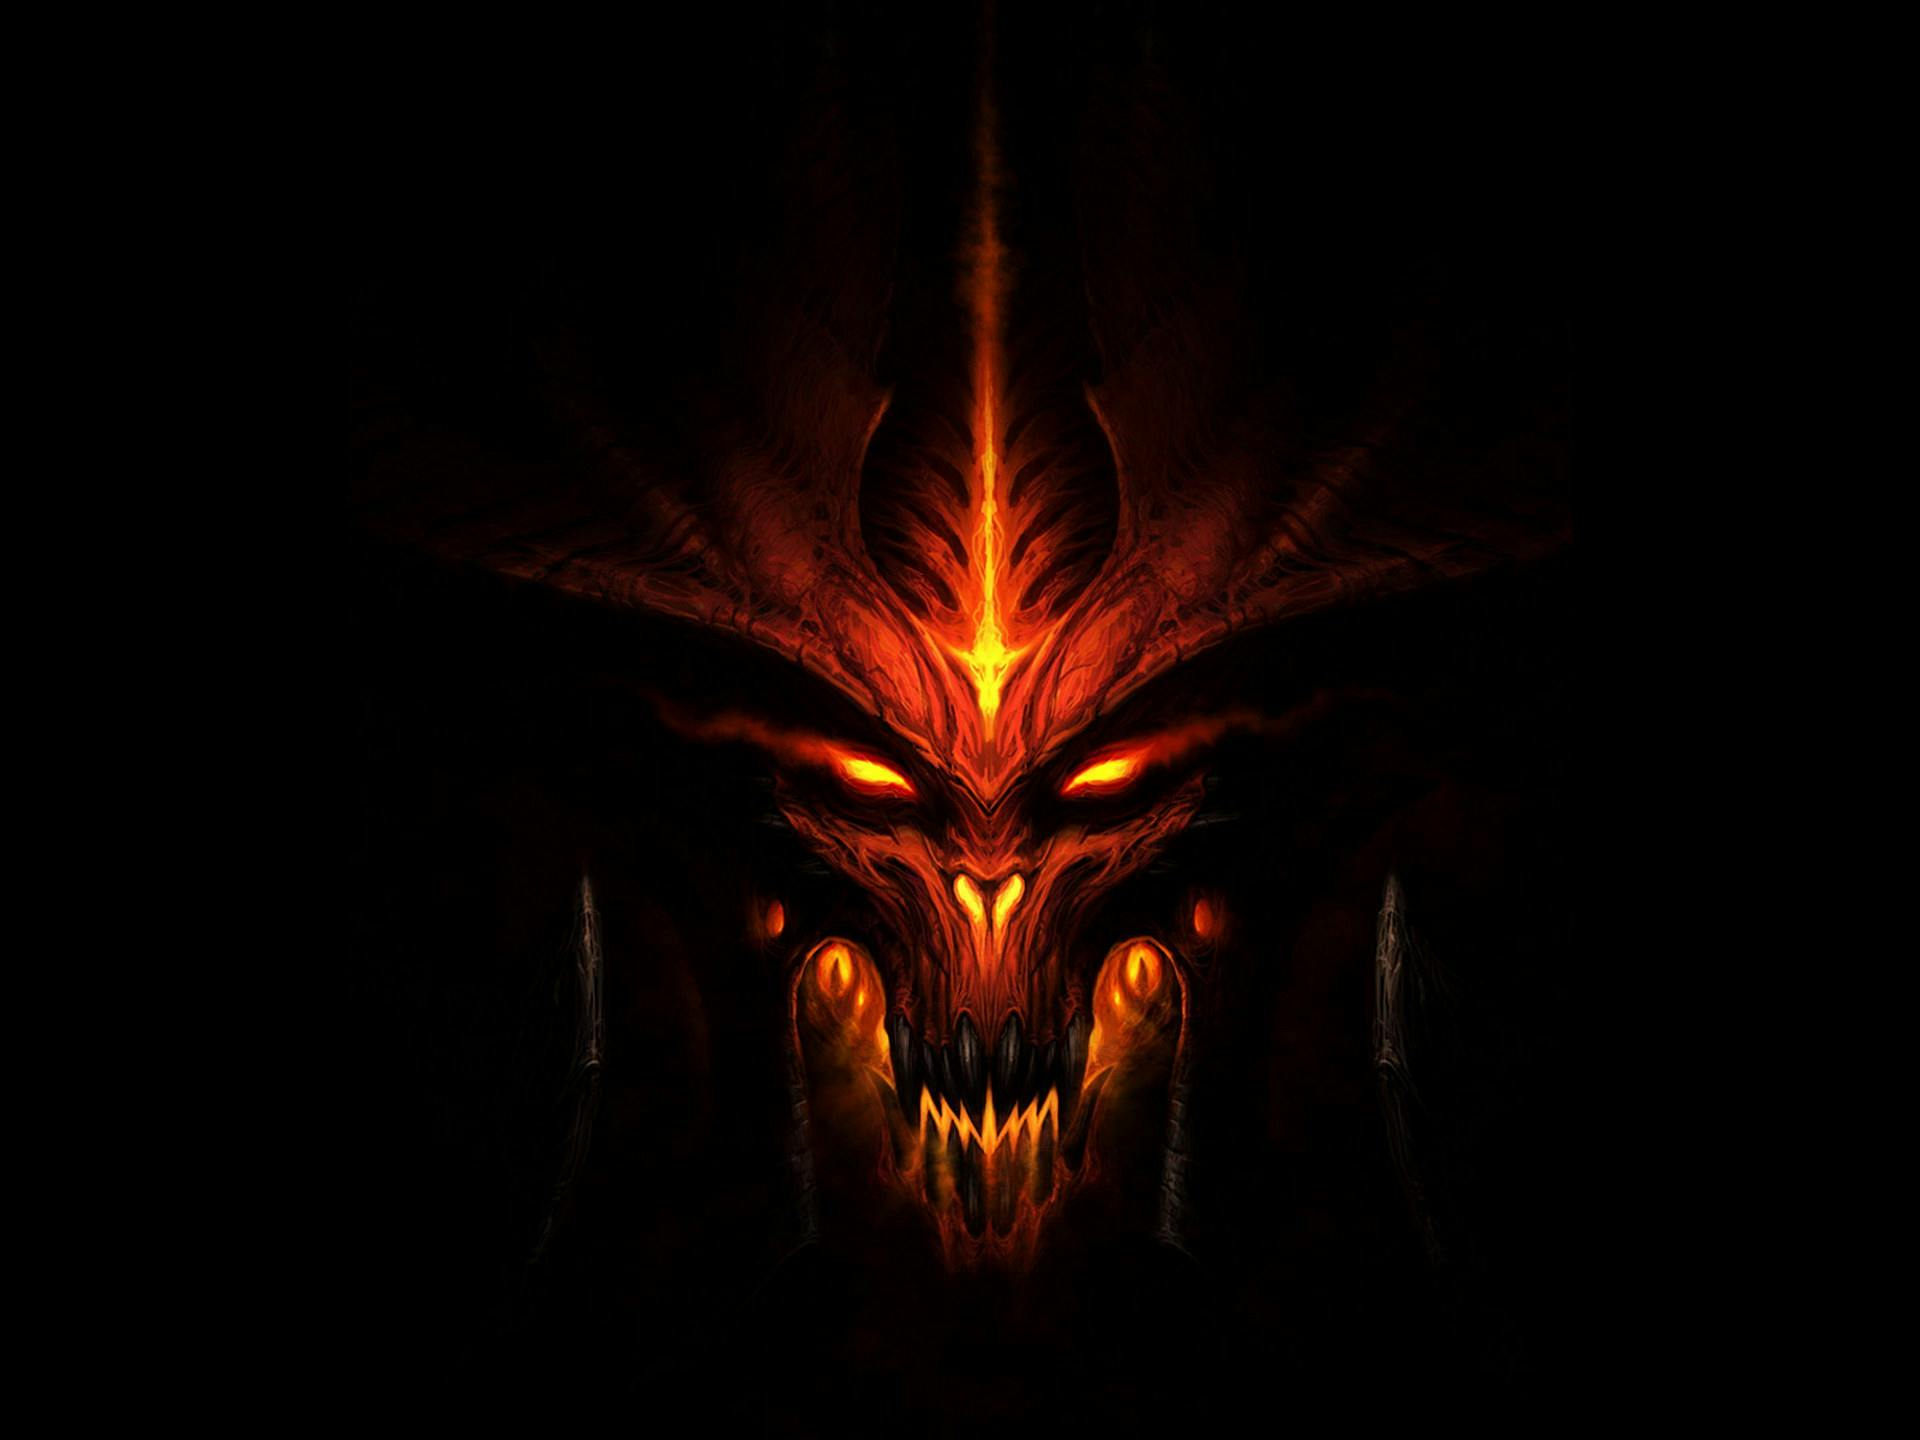 Guild background image